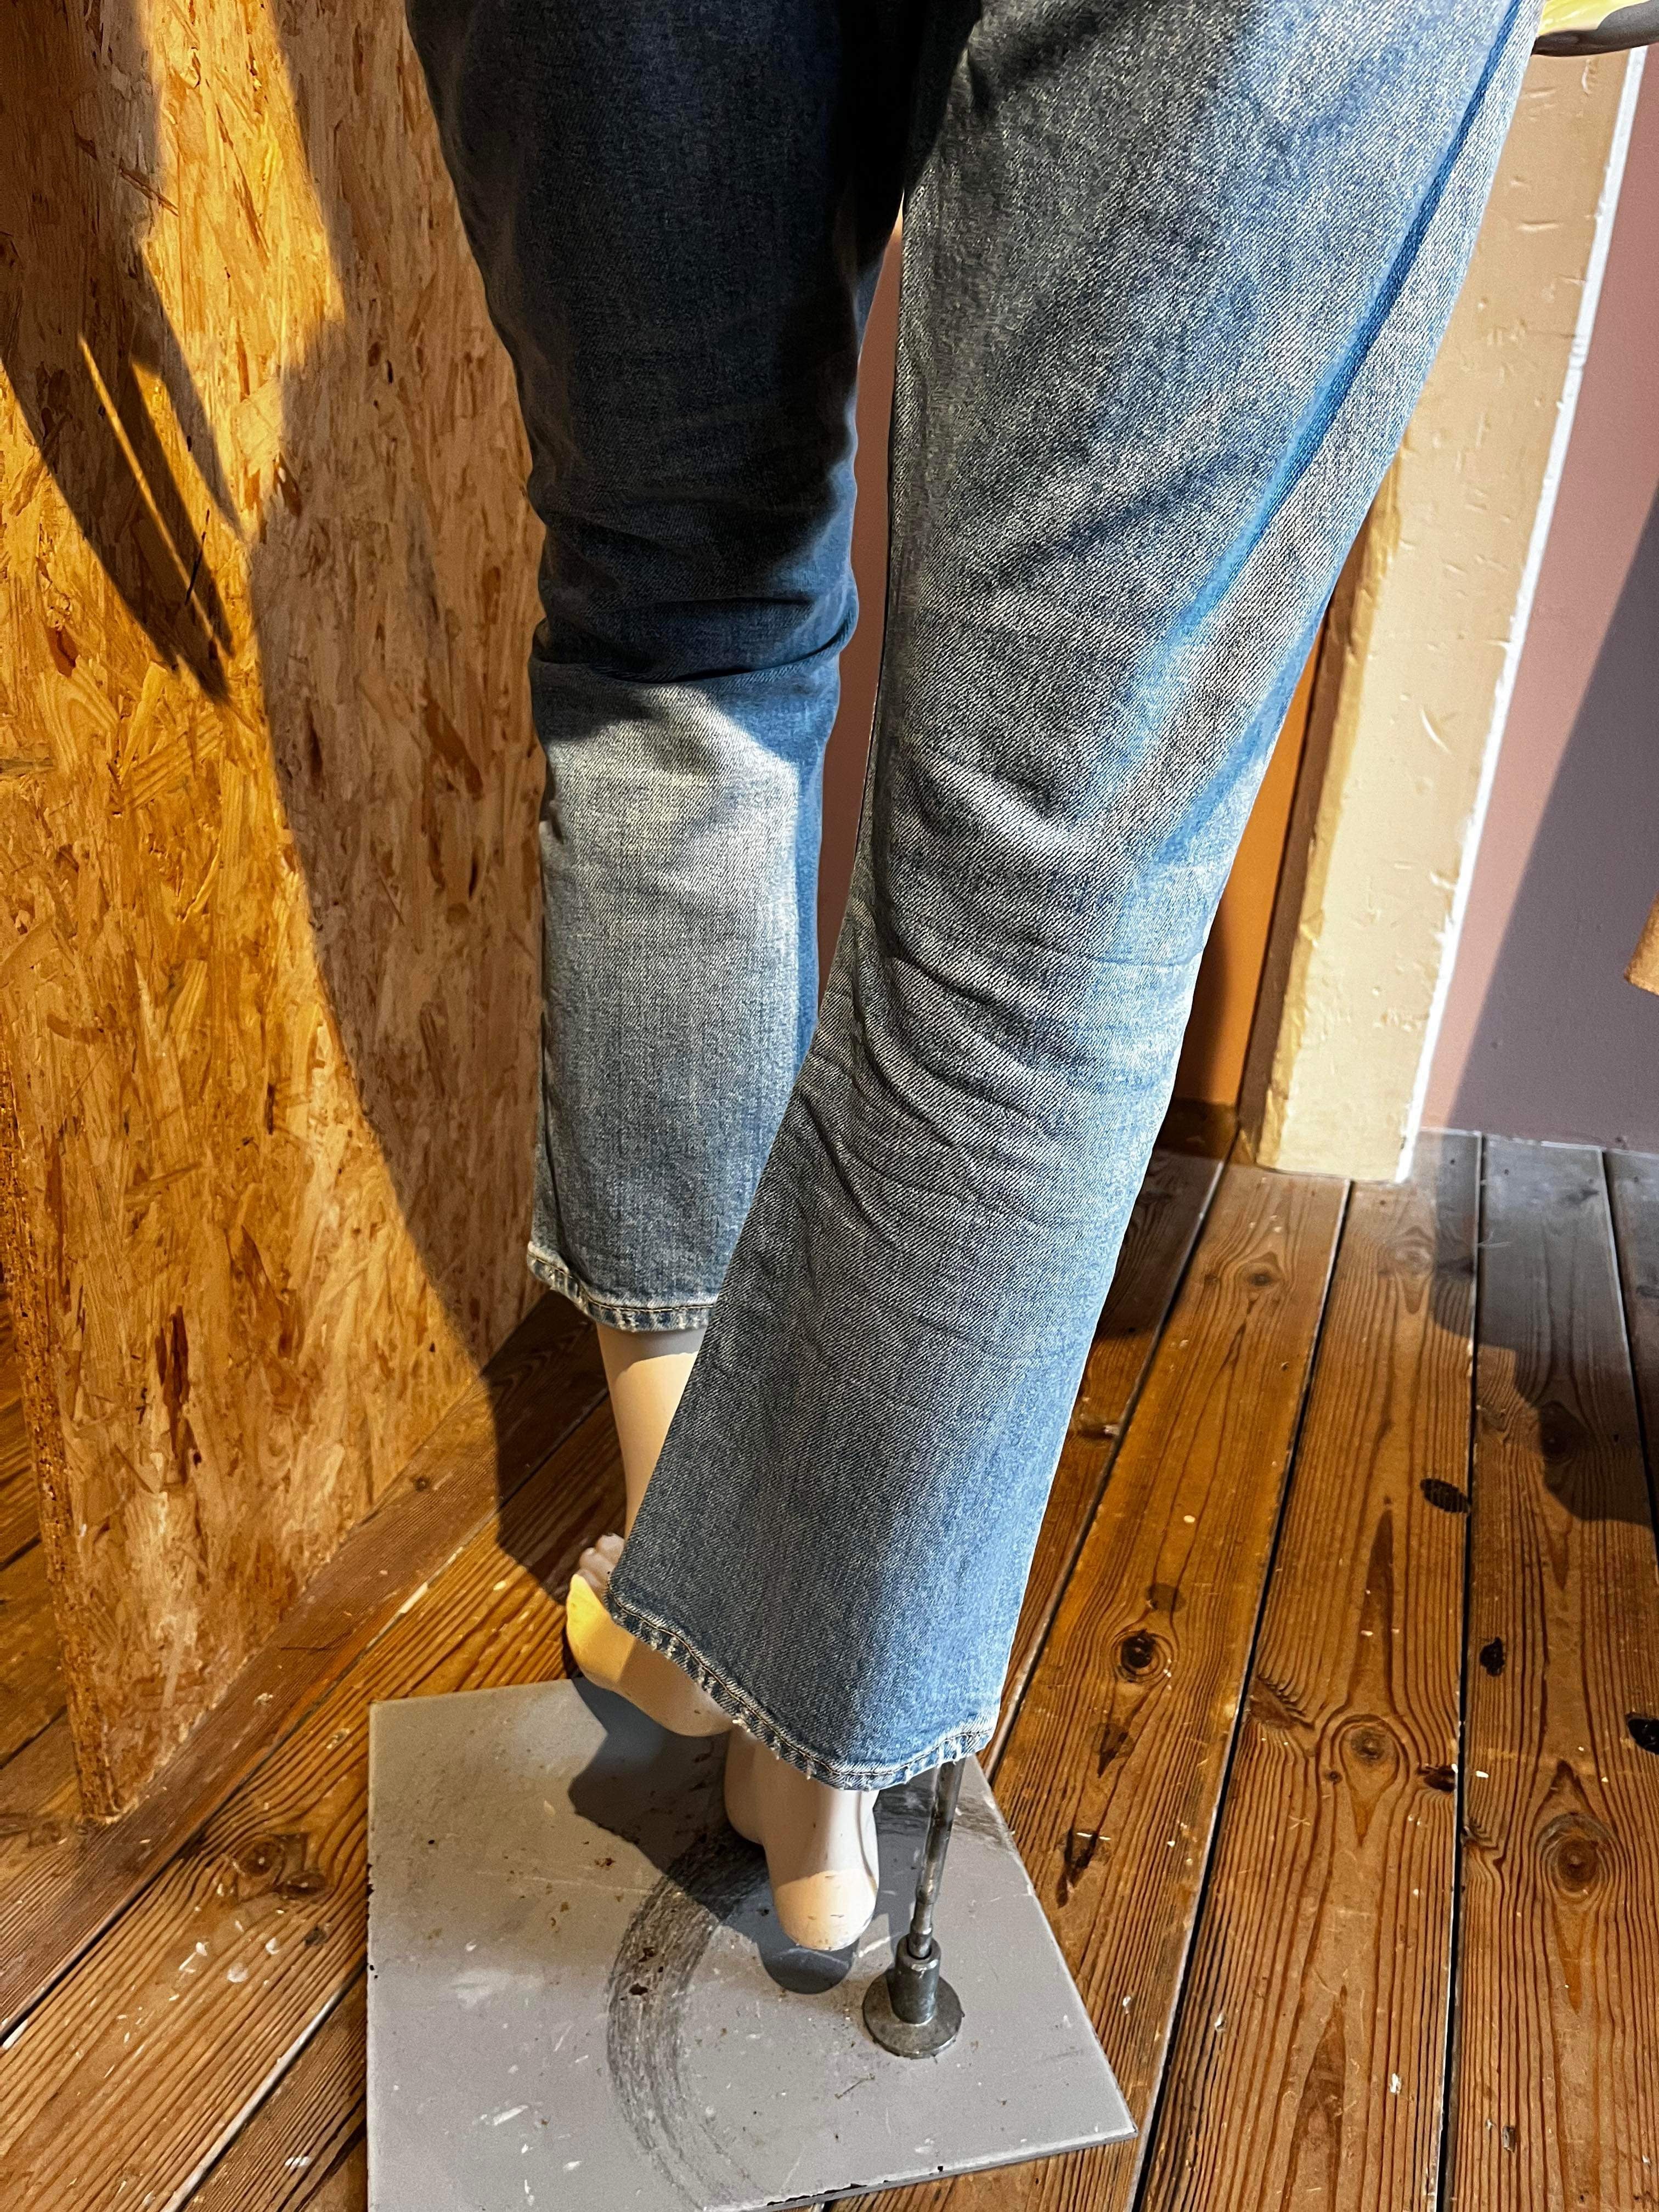 Hudson - Jeans - Size: 28